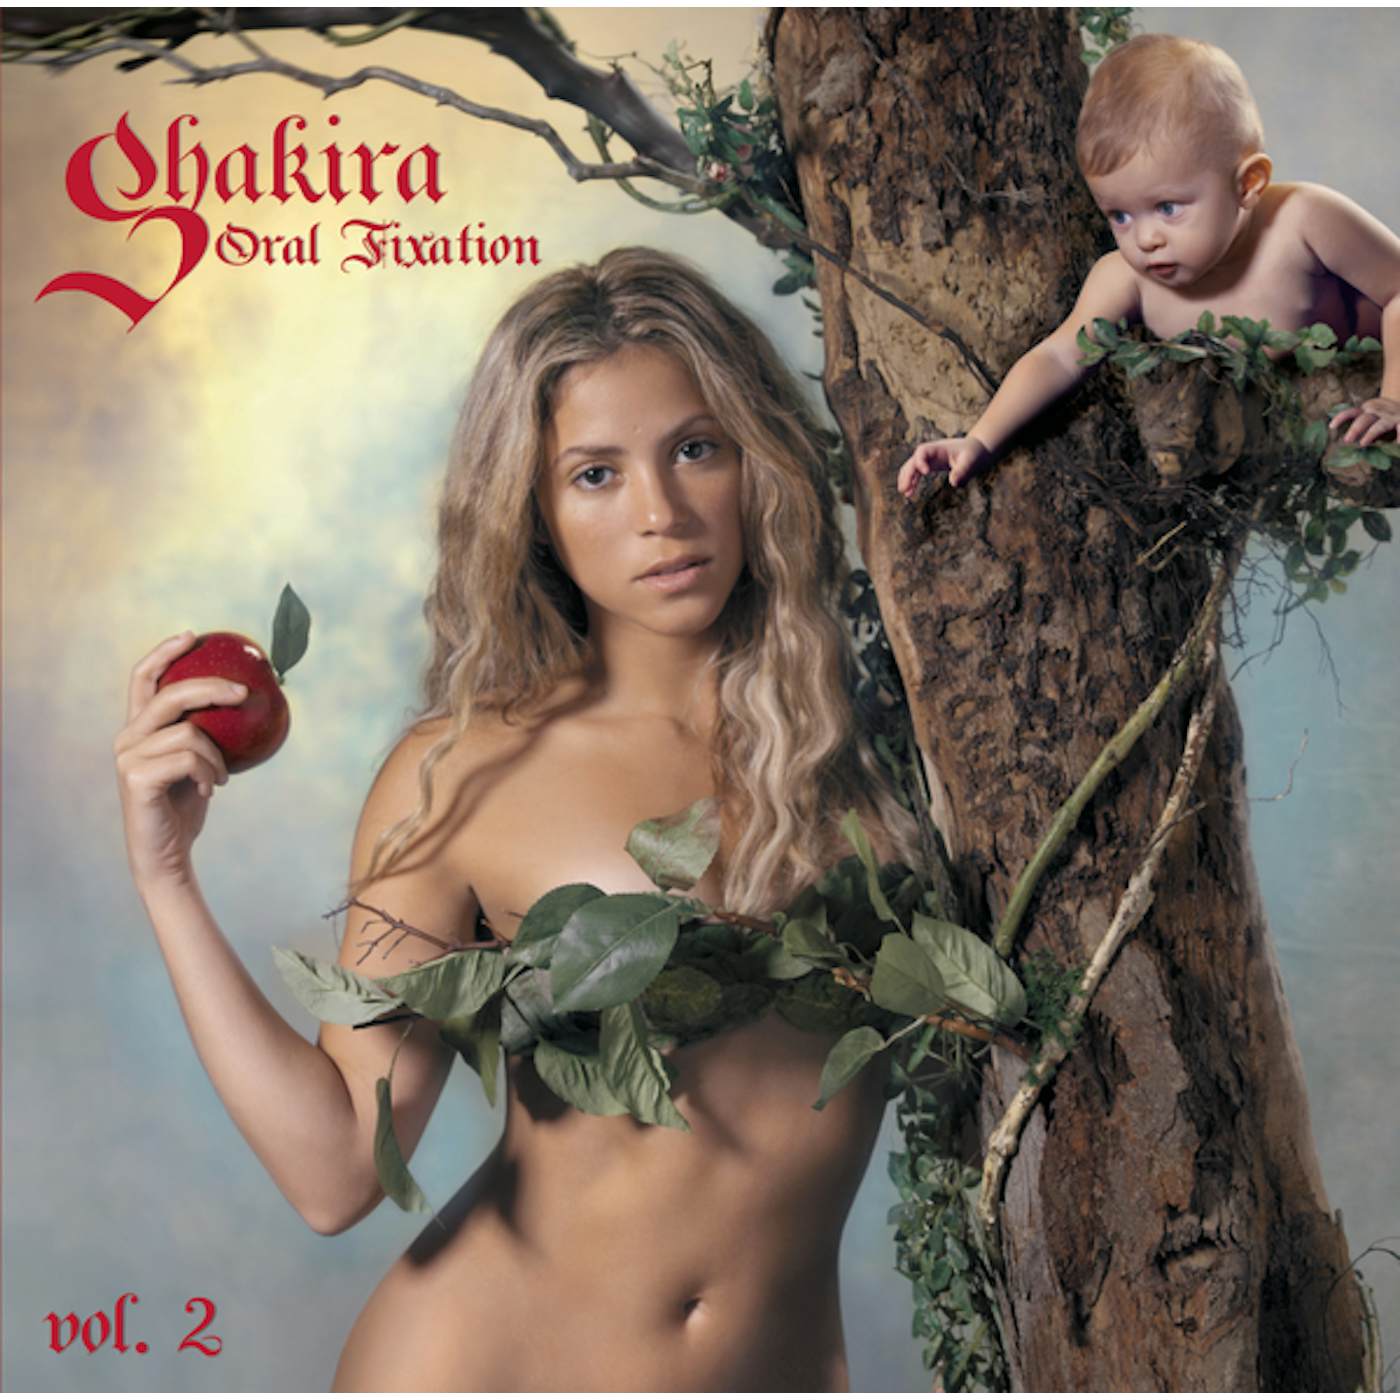 Shakira ORAL FIXATION VOL.2 CD